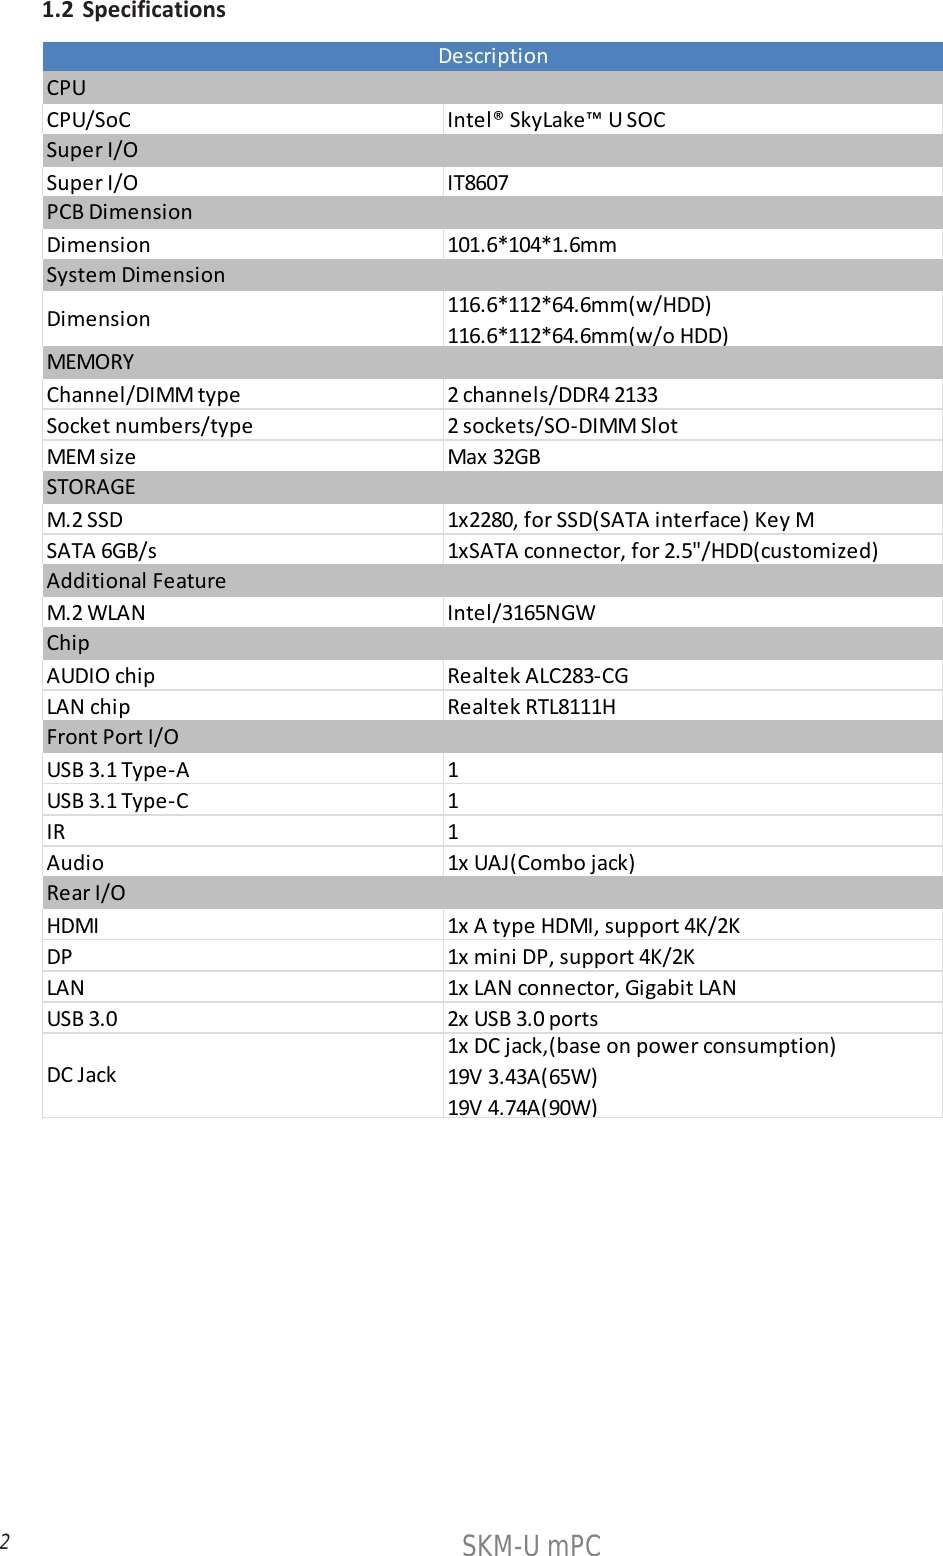 2SKM-U mPC1.2 SpecificationsCPU/SoC Intel® SkyLake™ U SOCSuper I/O IT8607Dimension 101.6*104*1.6mmChannel/DIMM type 2 channels/DDR4 2133Socket numbers/type 2 sockets/SO‐DIMM SlotMEM size Max 32GBM.2 SSD 1x2280, for SSD(SATA interface) Key MSATA 6GB/s 1xSATA connector, for 2.5&quot;/HDD(customized)M.2 WLAN Intel/3165NGWAUDIO chip Realtek ALC283‐CGLAN chip Realtek RTL8111HUSB 3.1 Type‐A1USB 3.1 Type‐C1IR 1Audio 1x UAJ(Combo jack)HDMI 1x A type HDMI, support 4K/2KDP 1x mini DP, support 4K/2KLAN 1x LAN connector, Gigabit LANUSB 3.0 2x USB 3.0 ports1x DC jack,(base on power consumption)19V 3.43A(65W)19V 4.74A(90W)DC JackMEMORYSTORAGEAdditional FeatureChipFront Port I/ORear I/ODescriptionCPUSuper I/OPCB DimensionSystem Dimension116.6*112*64.6mm(w/HDD)116.6*112*64.6mm(w/o HDD)Dimension